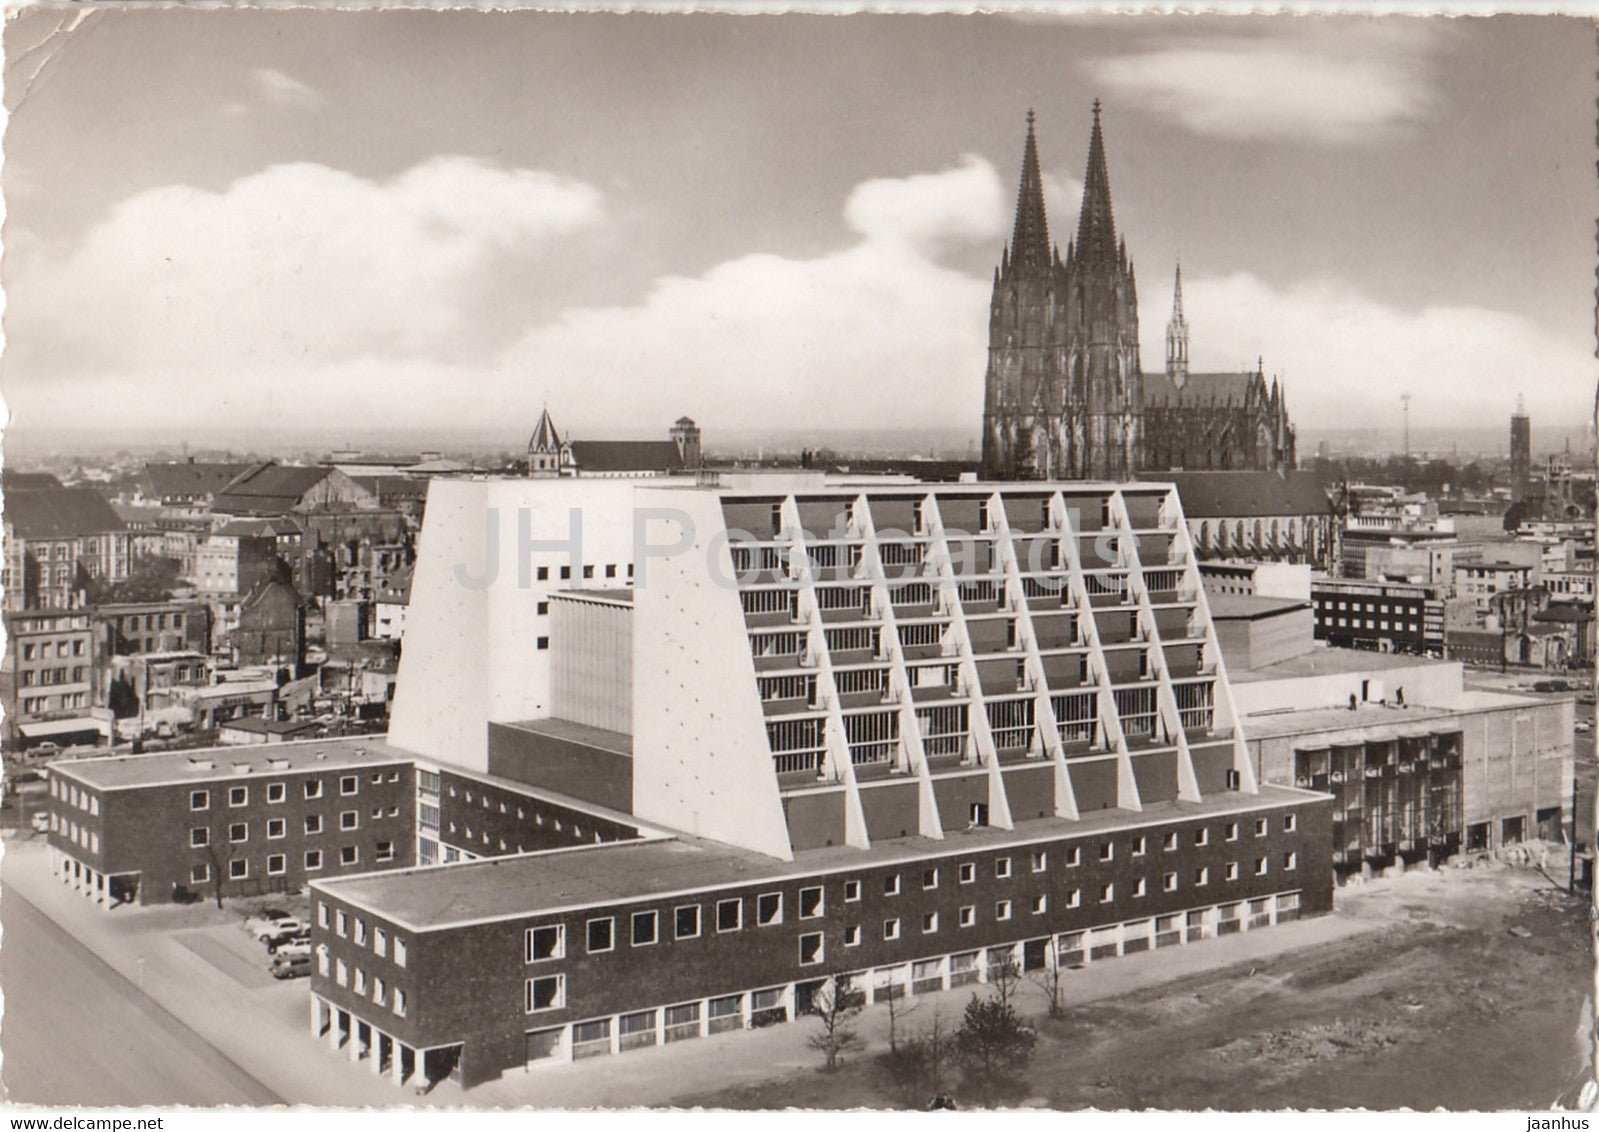 Koln am Rhein - Neues Opernhaus mit Dom - opera - cathedral - 1964 - Germany - used - JH Postcards